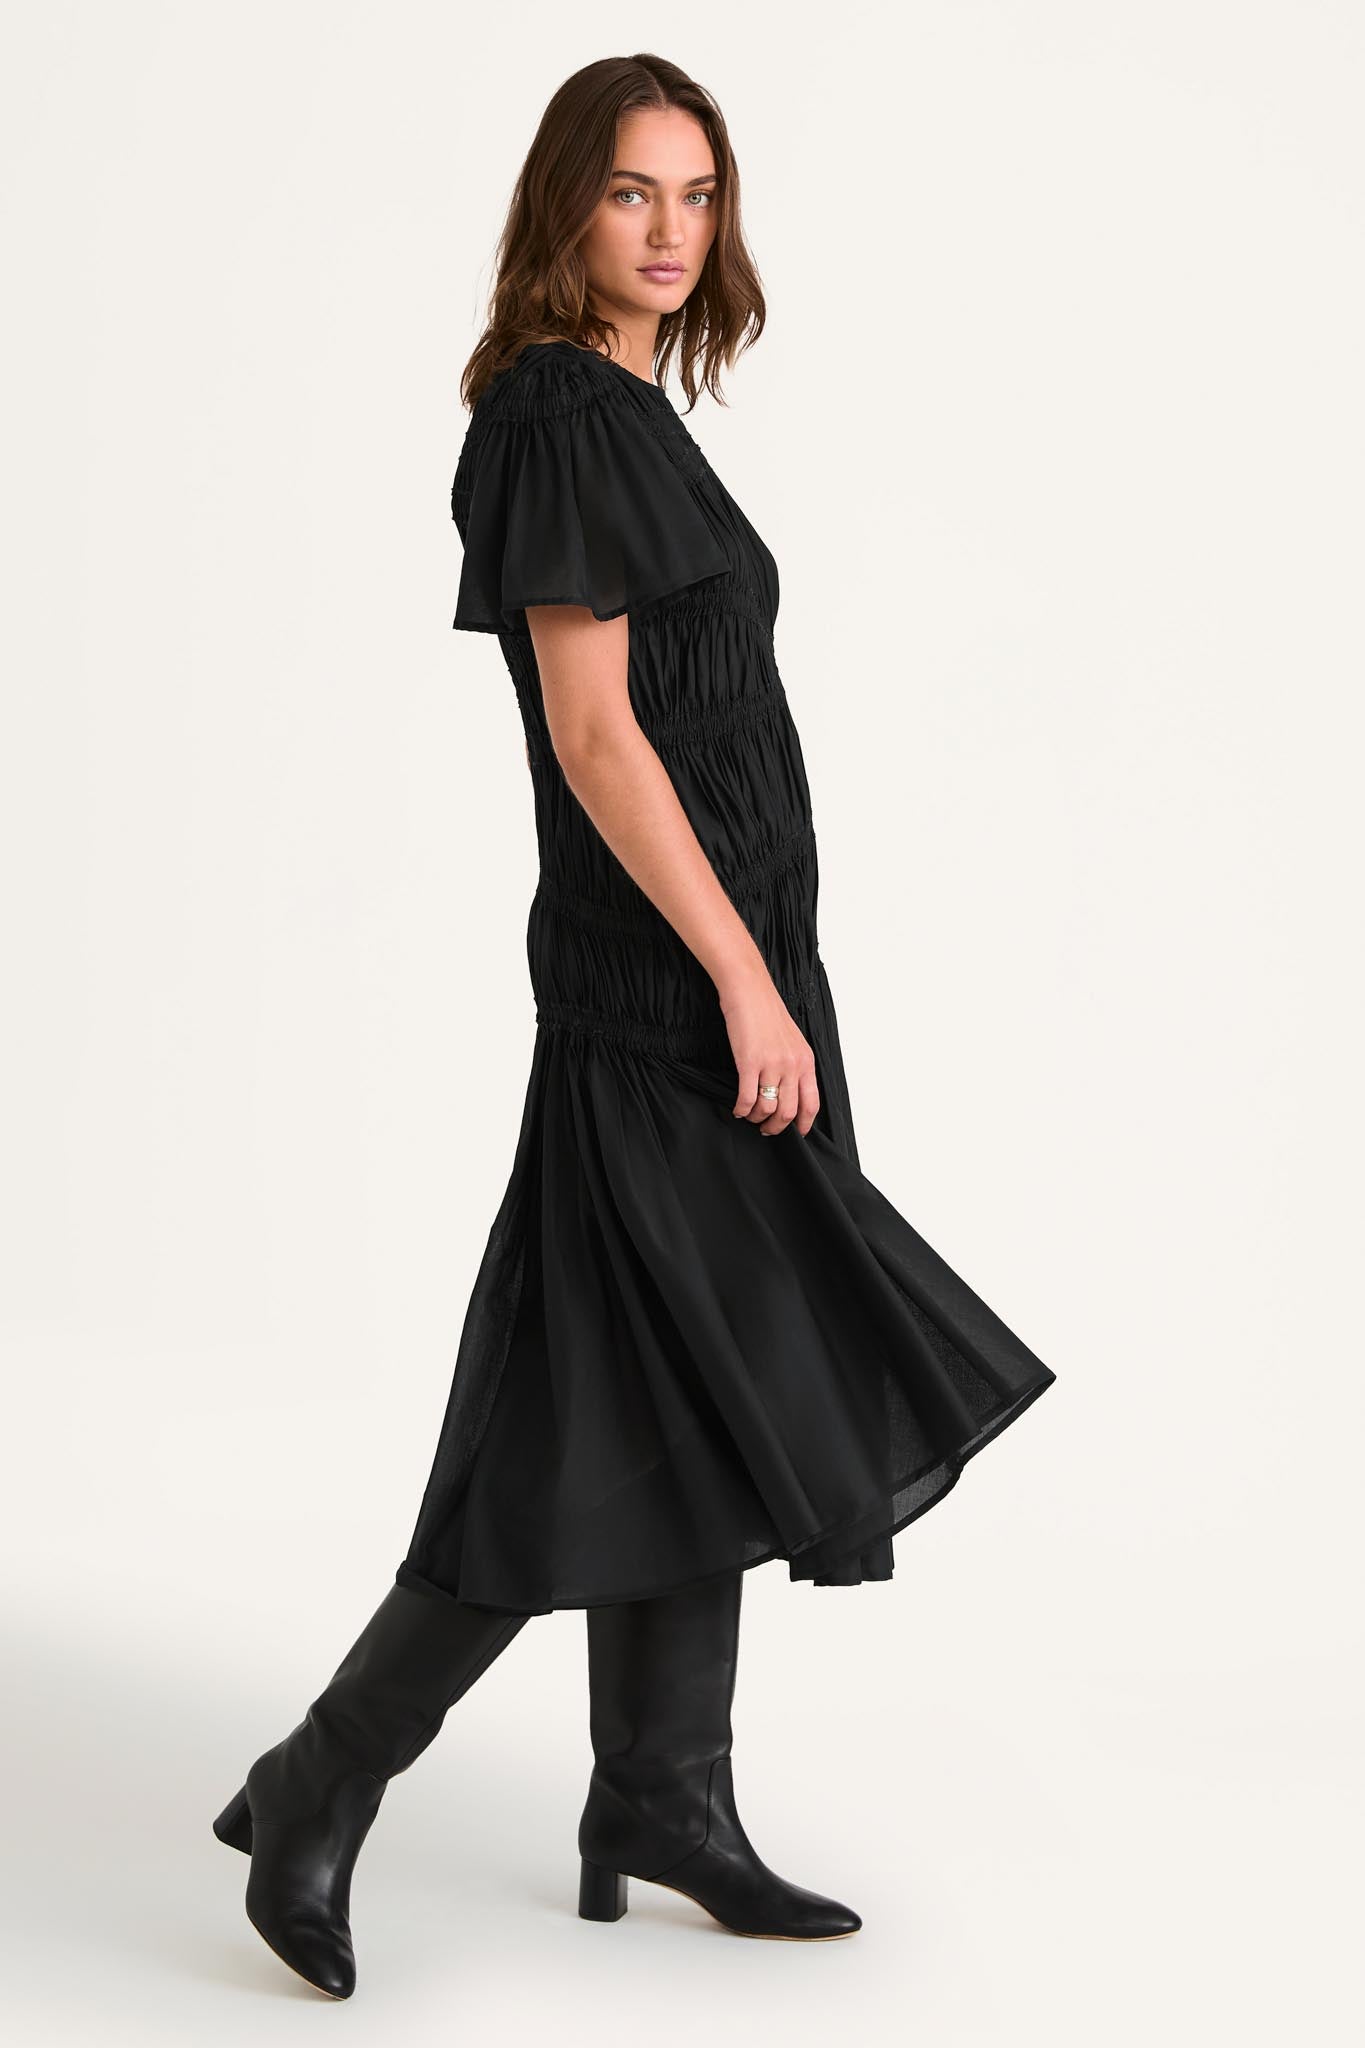 Seraphine Dress in Black